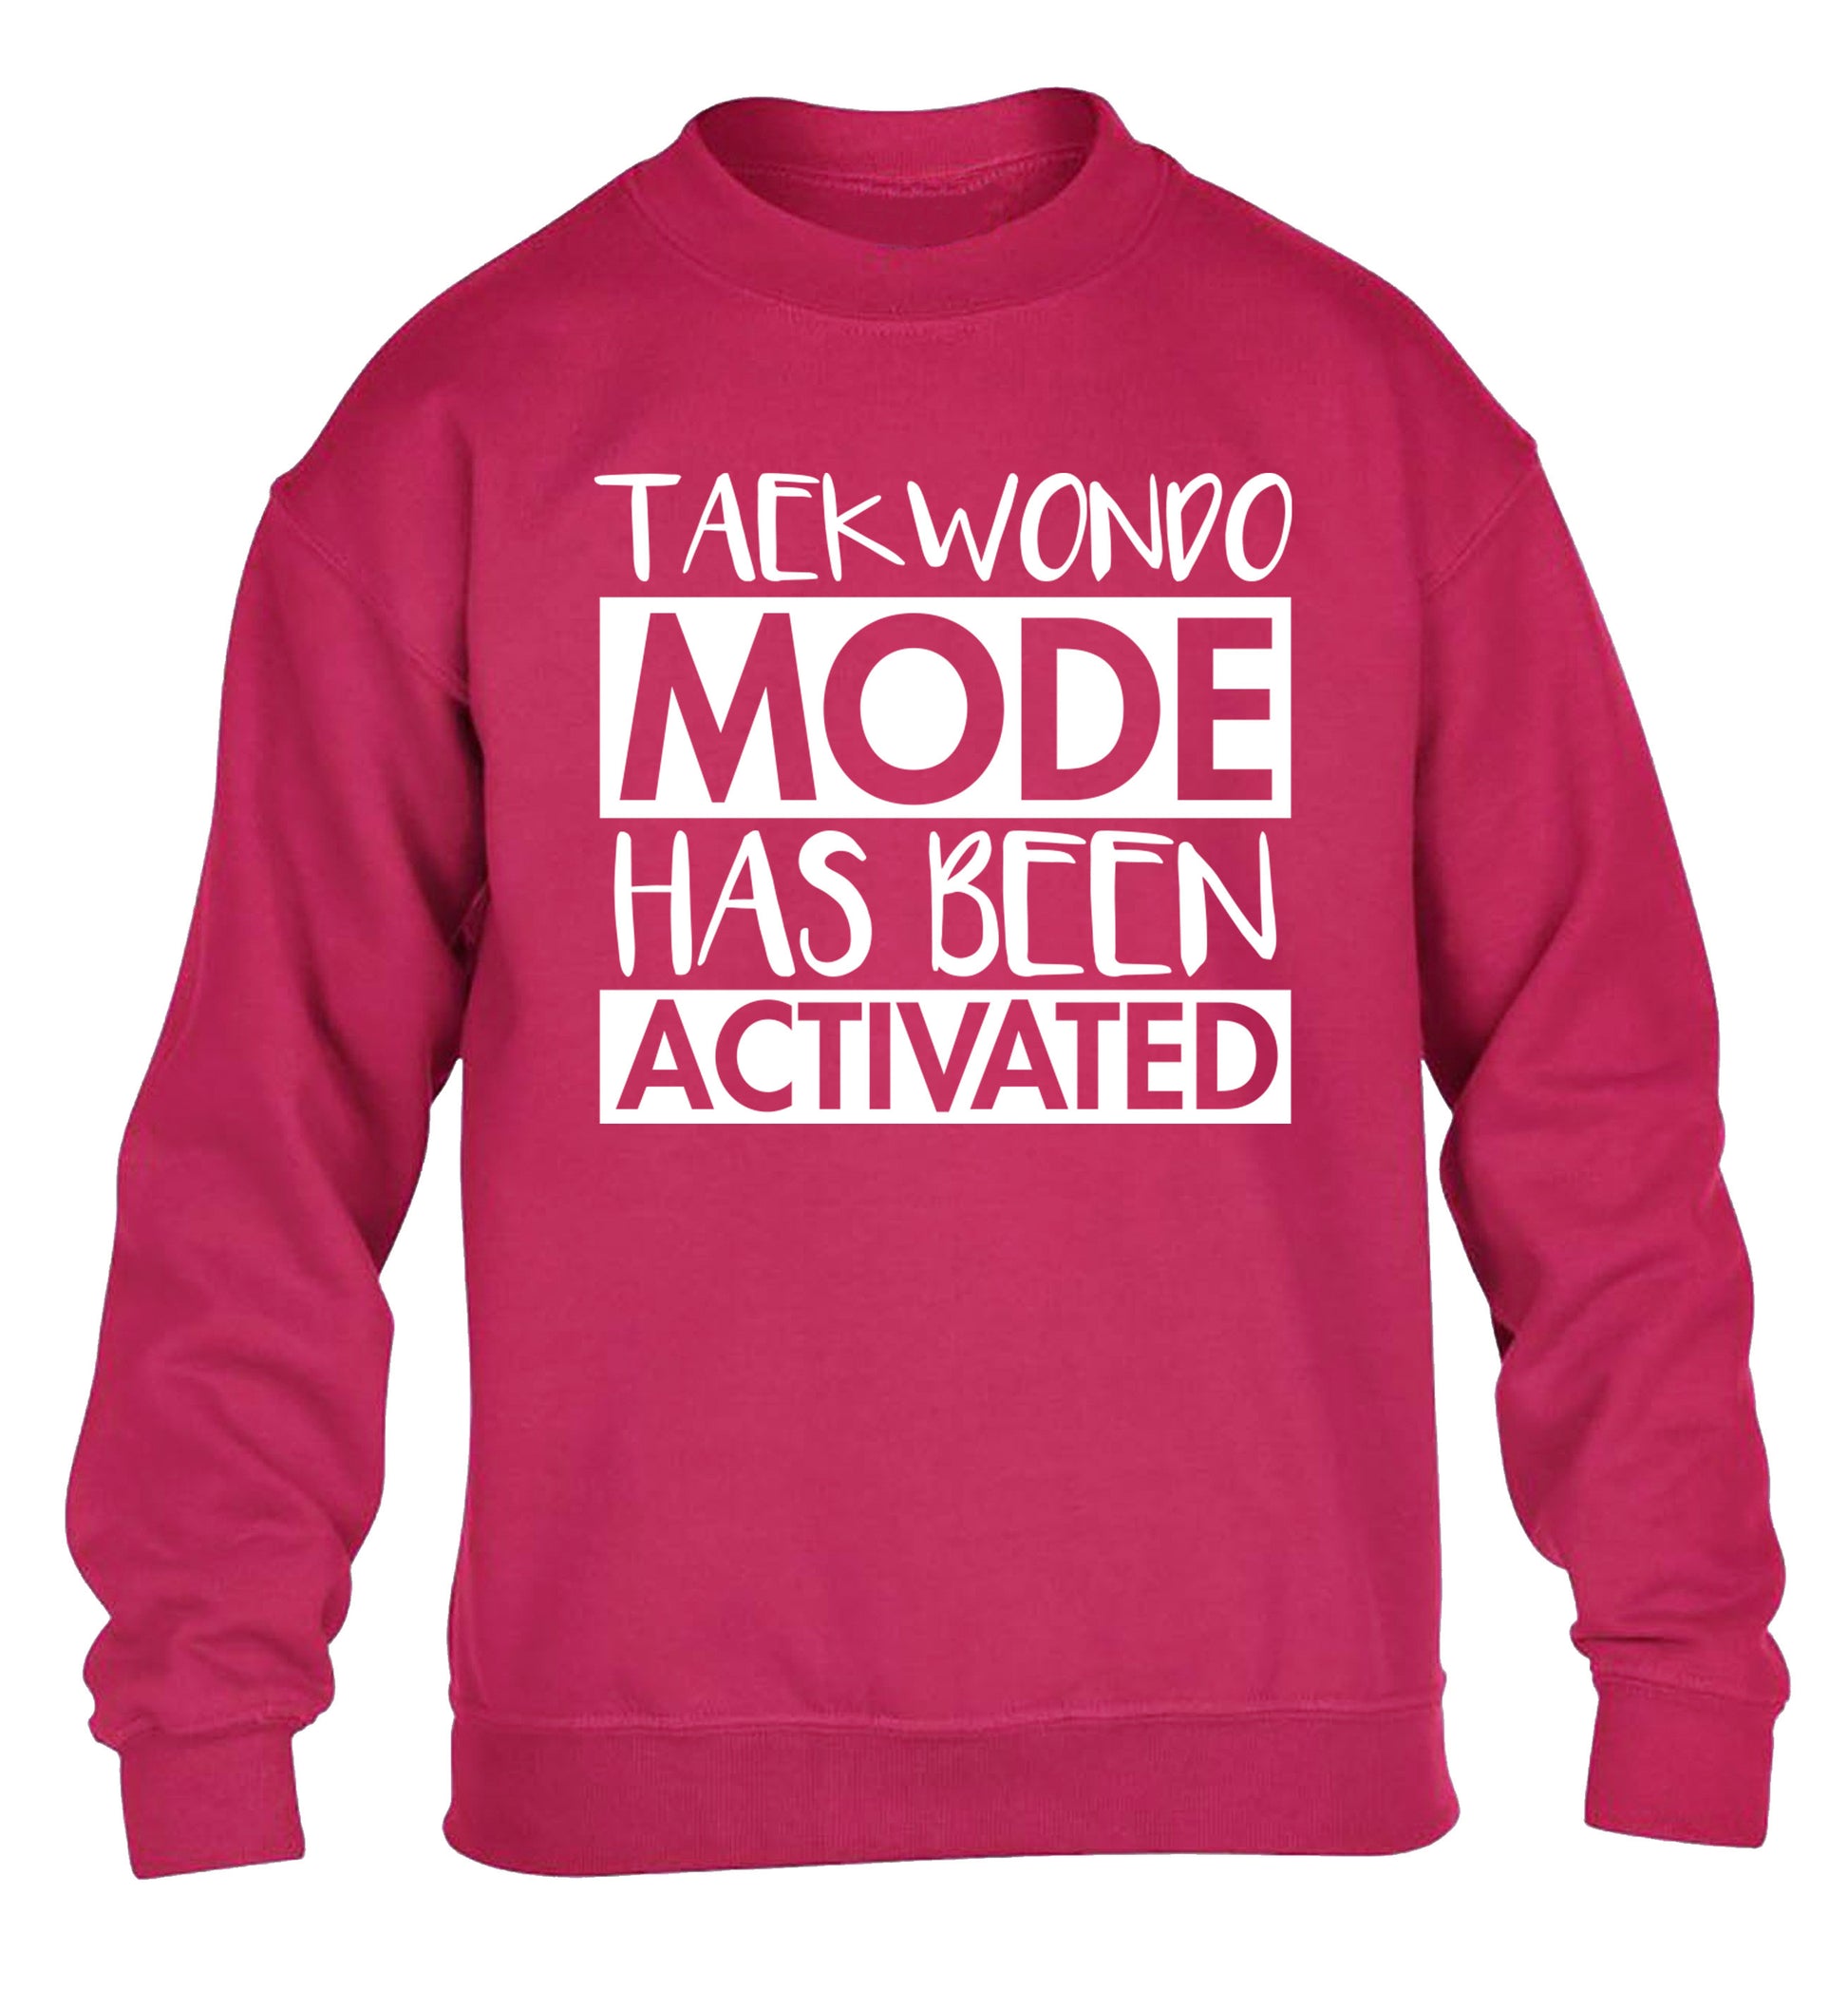 Taekwondo mode activated children's pink sweater 12-14 Years